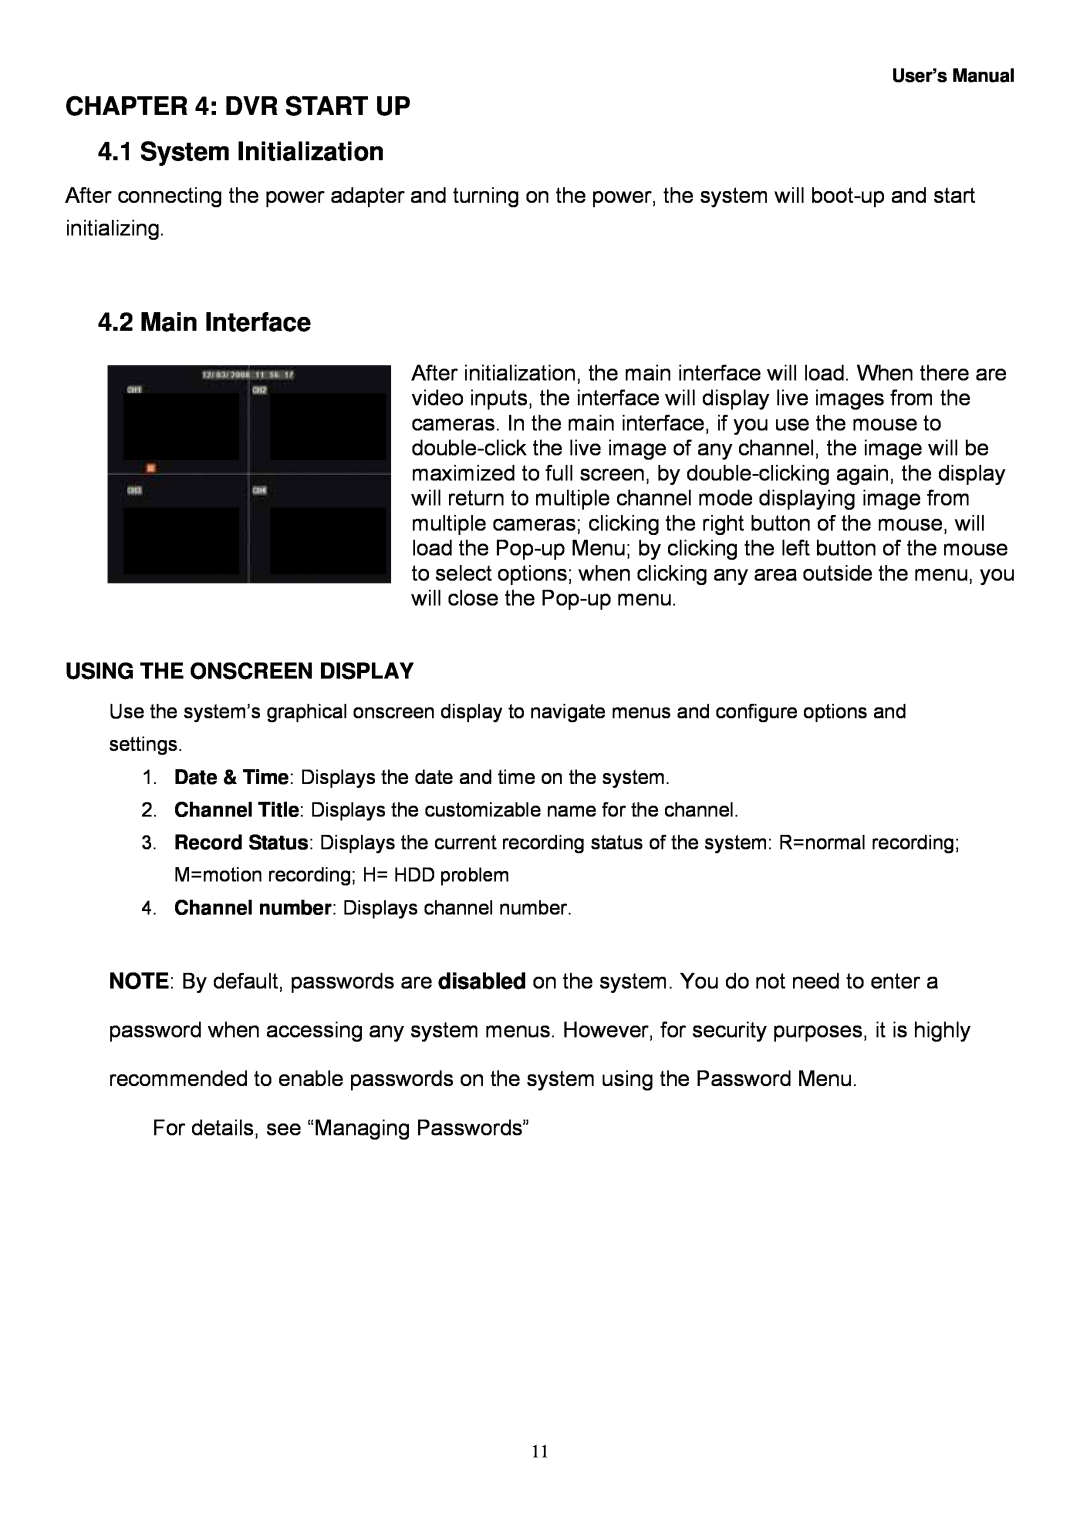 Night Owl Optics 4BL, Night Owl manual Main Interface, Using The Onscreen Display, DVR START UP 4.1 System Initialization 